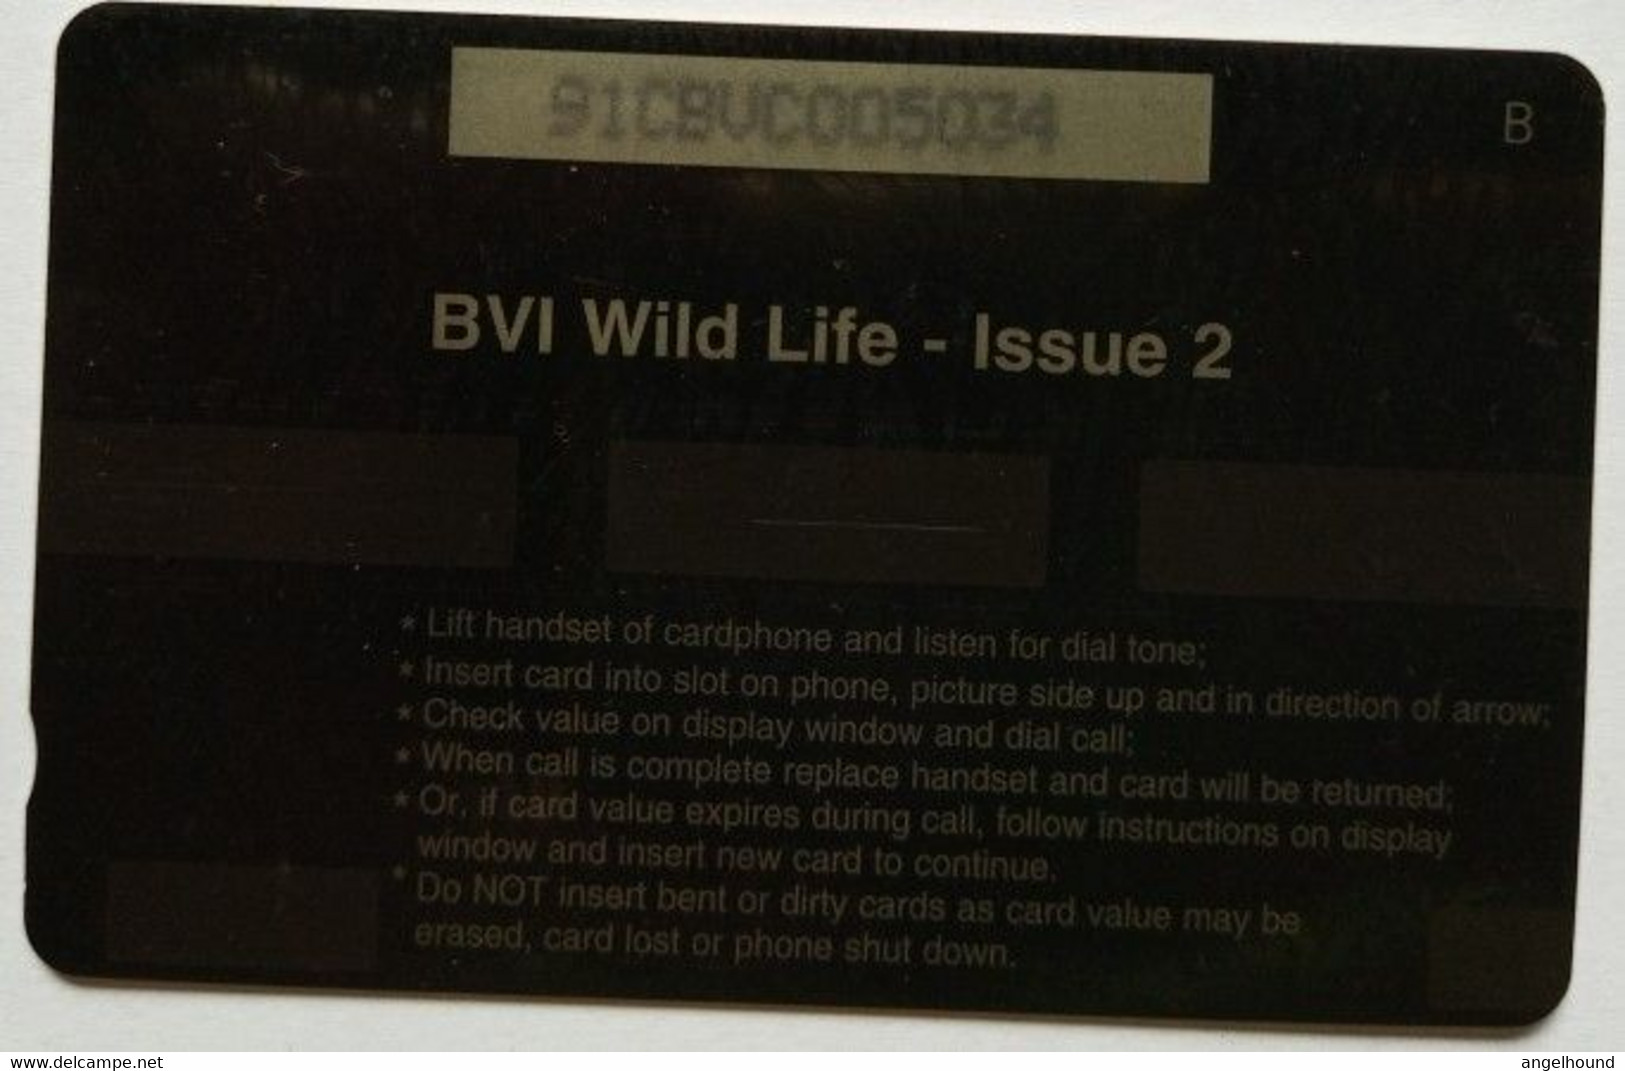 BVI Cable And Wireless 91CBVC  US$20  " Parrot Fish " - Maagdeneilanden